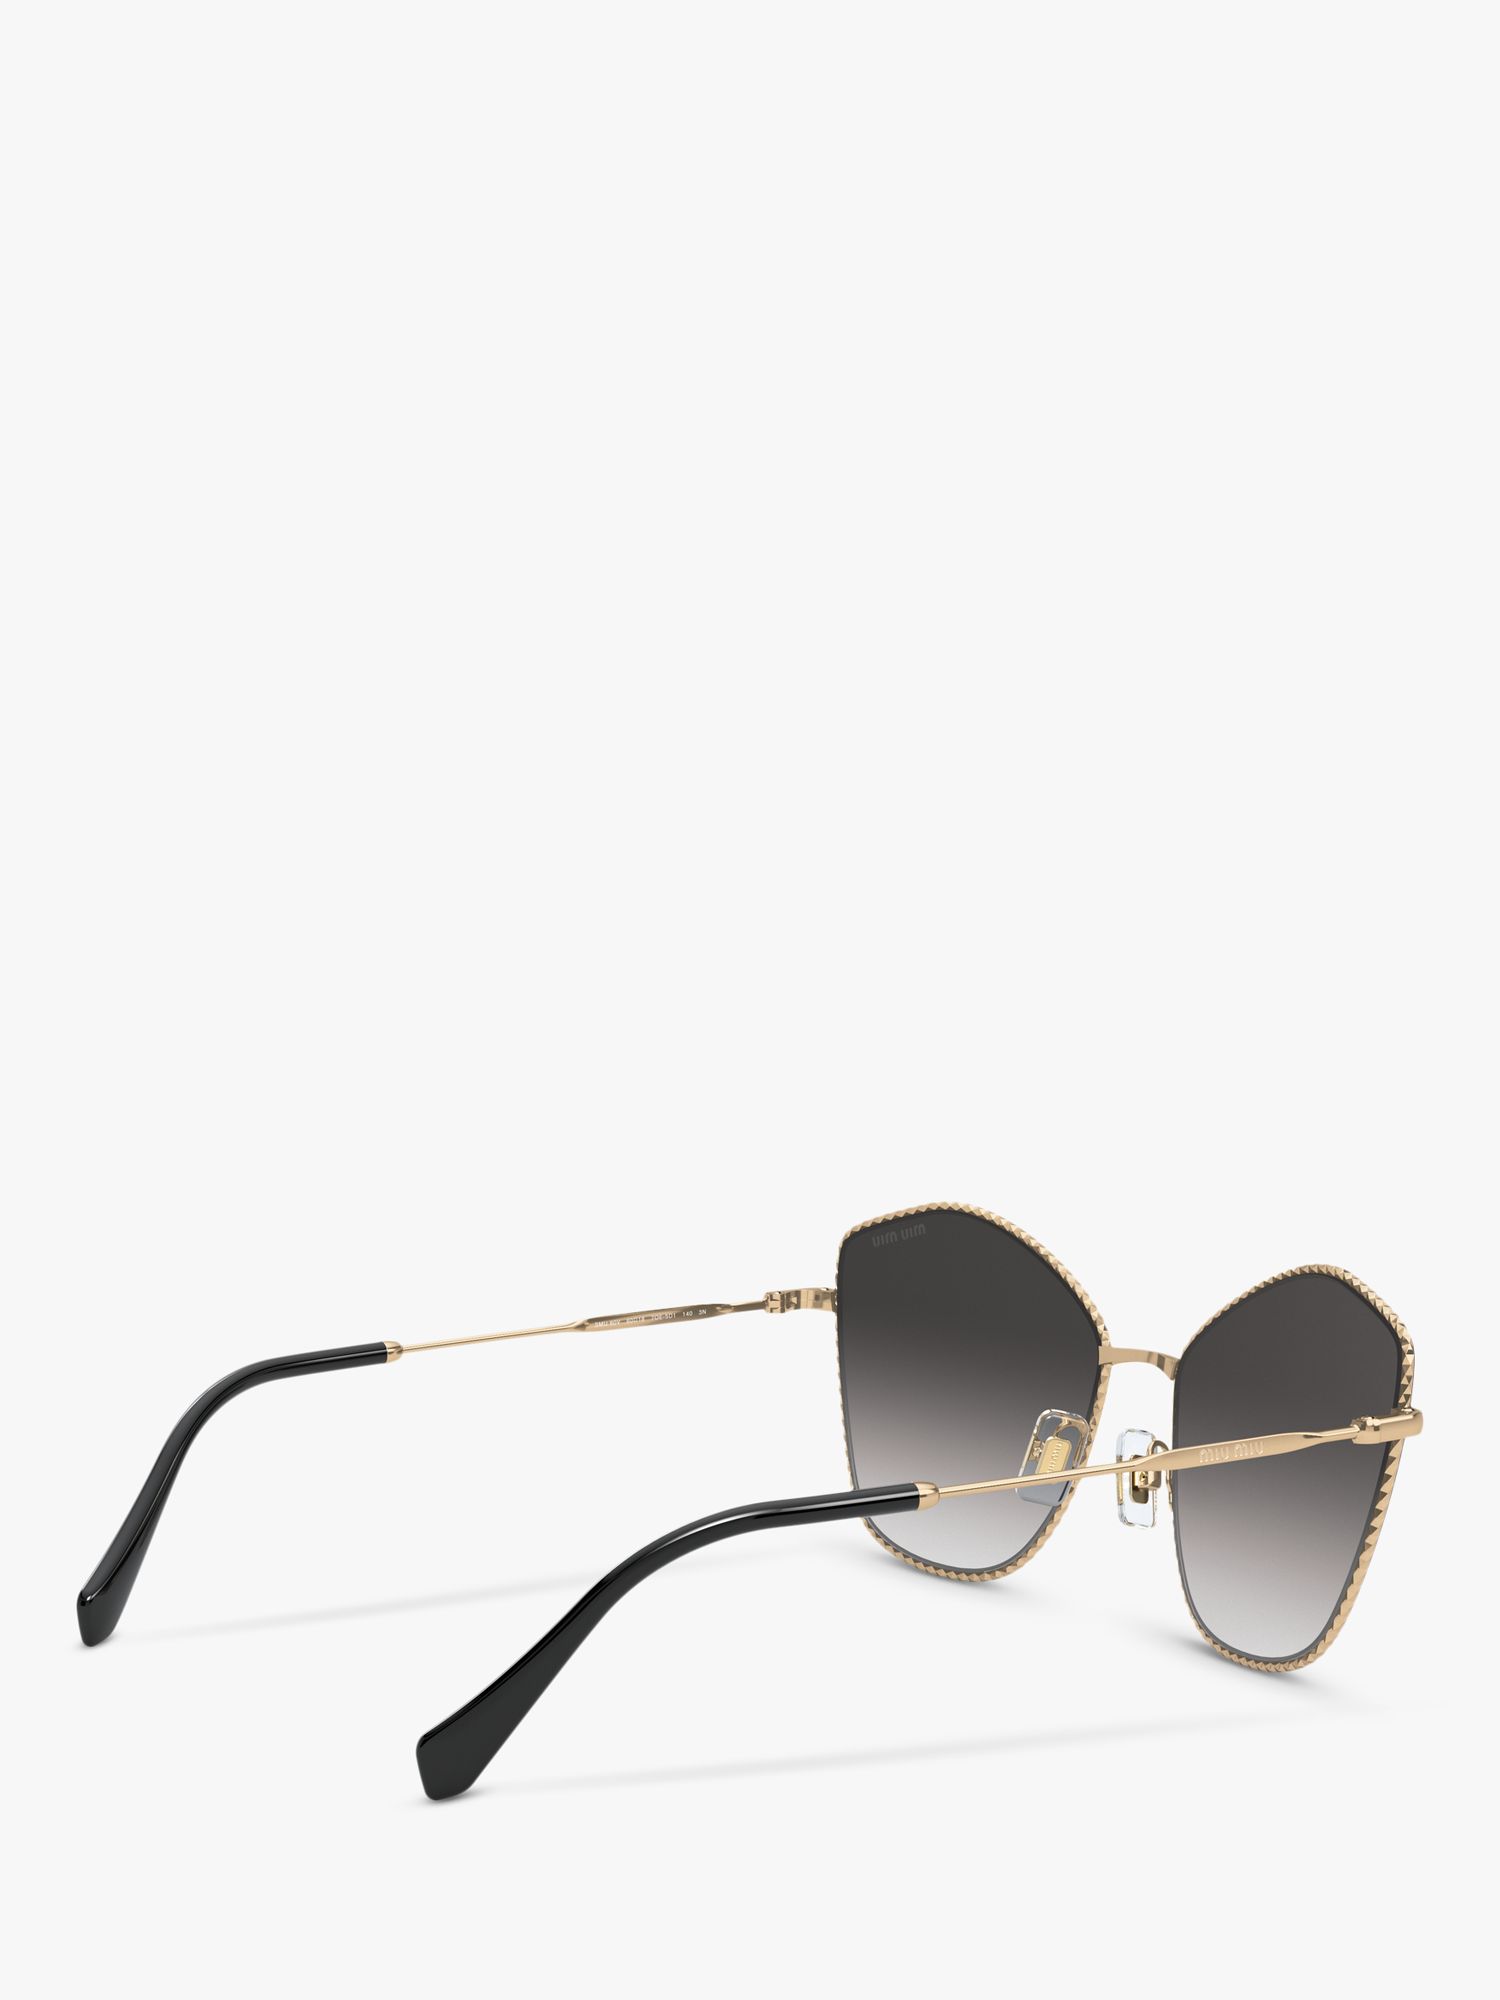 Buy Miu Miu MU 60VS Women's Cat's Eye Sunglasses, Antique Gold/Black Gradient Online at johnlewis.com